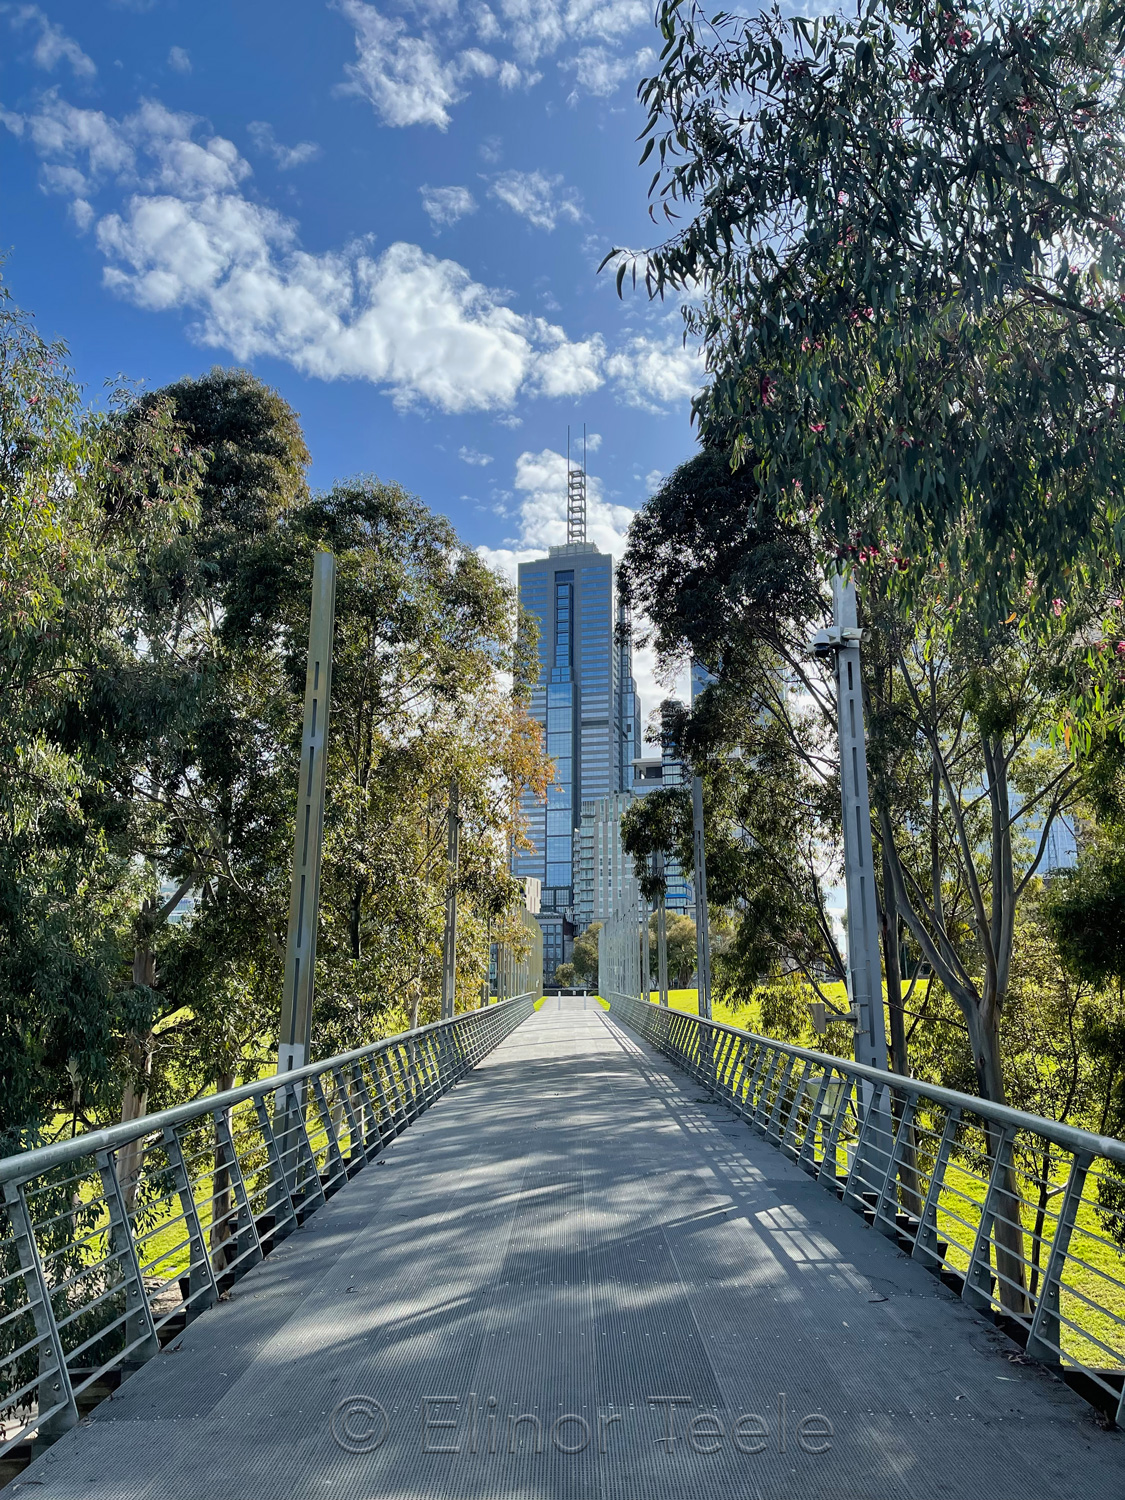 Bridge to Federation Bells, Melbourne